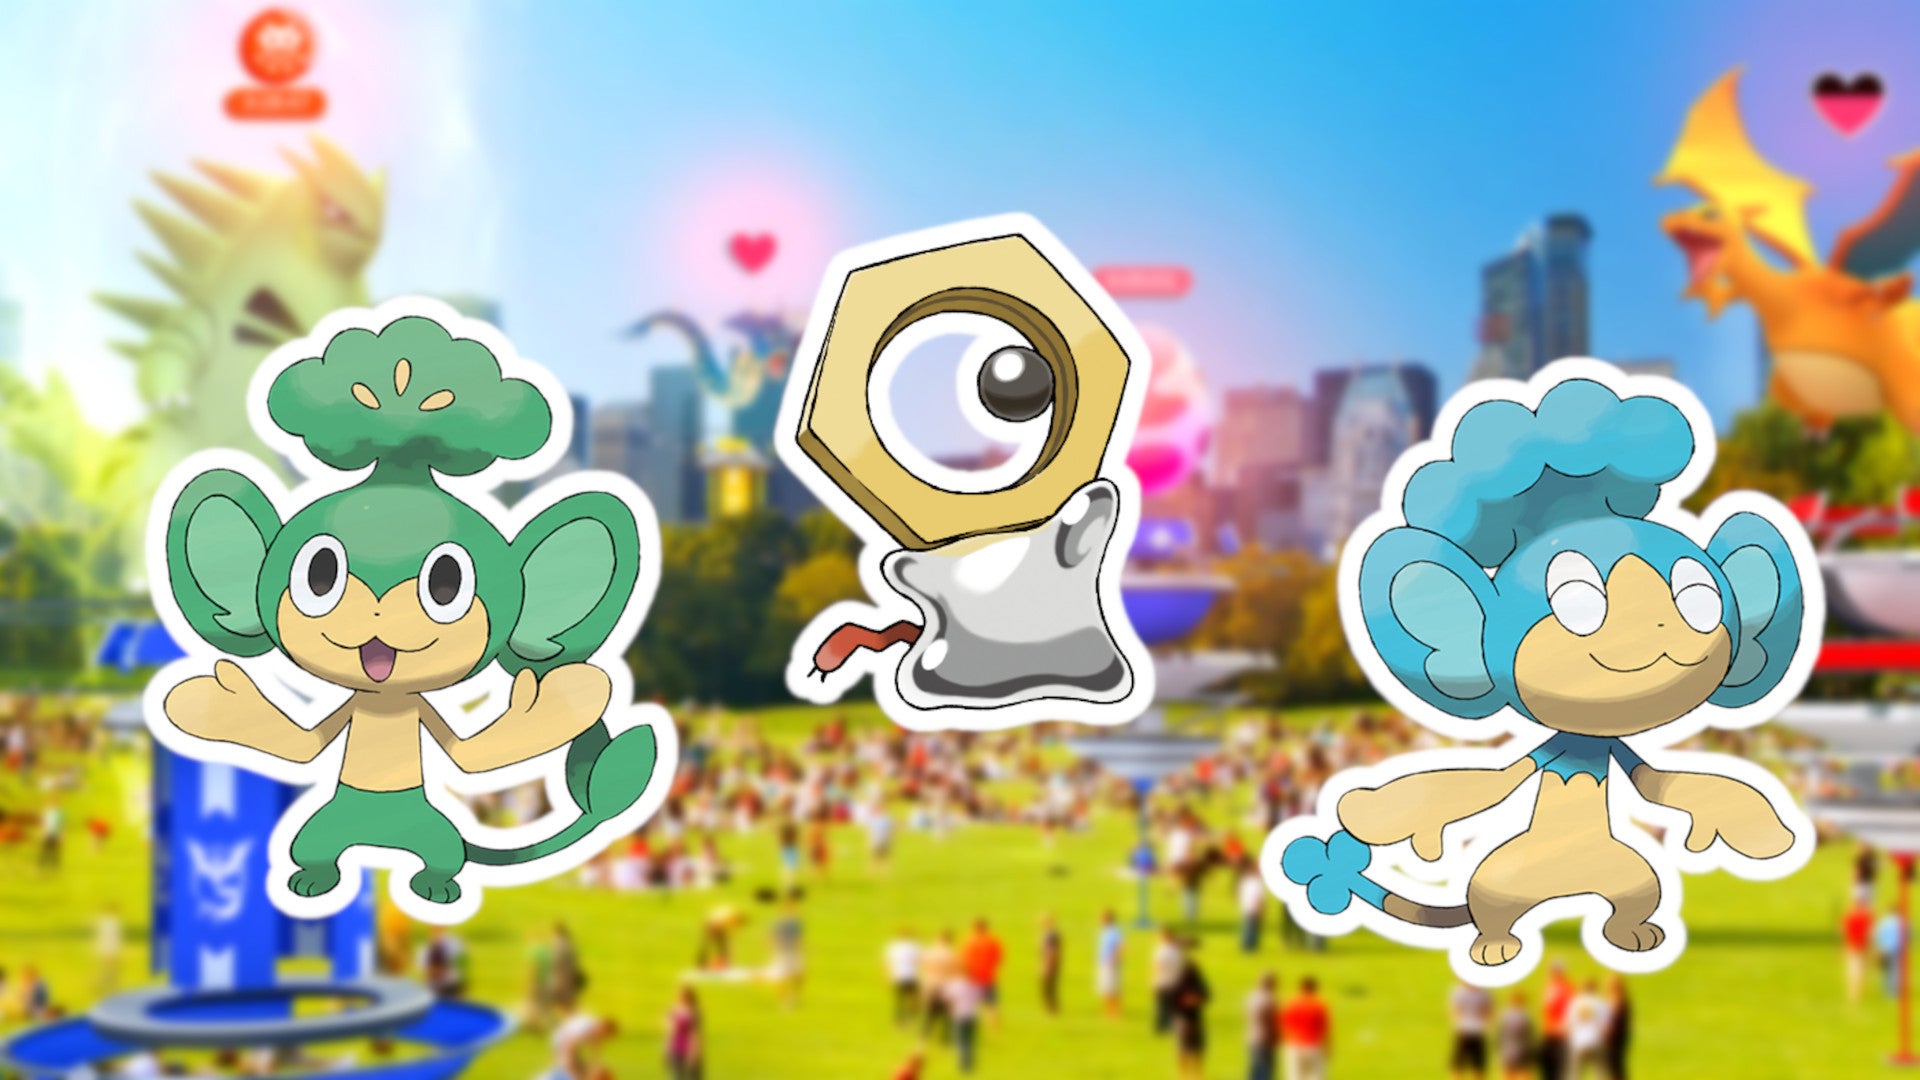 Pokémon Go: Let’s Go Event brings rare regional and shiny Pokémon – all info at a glance!